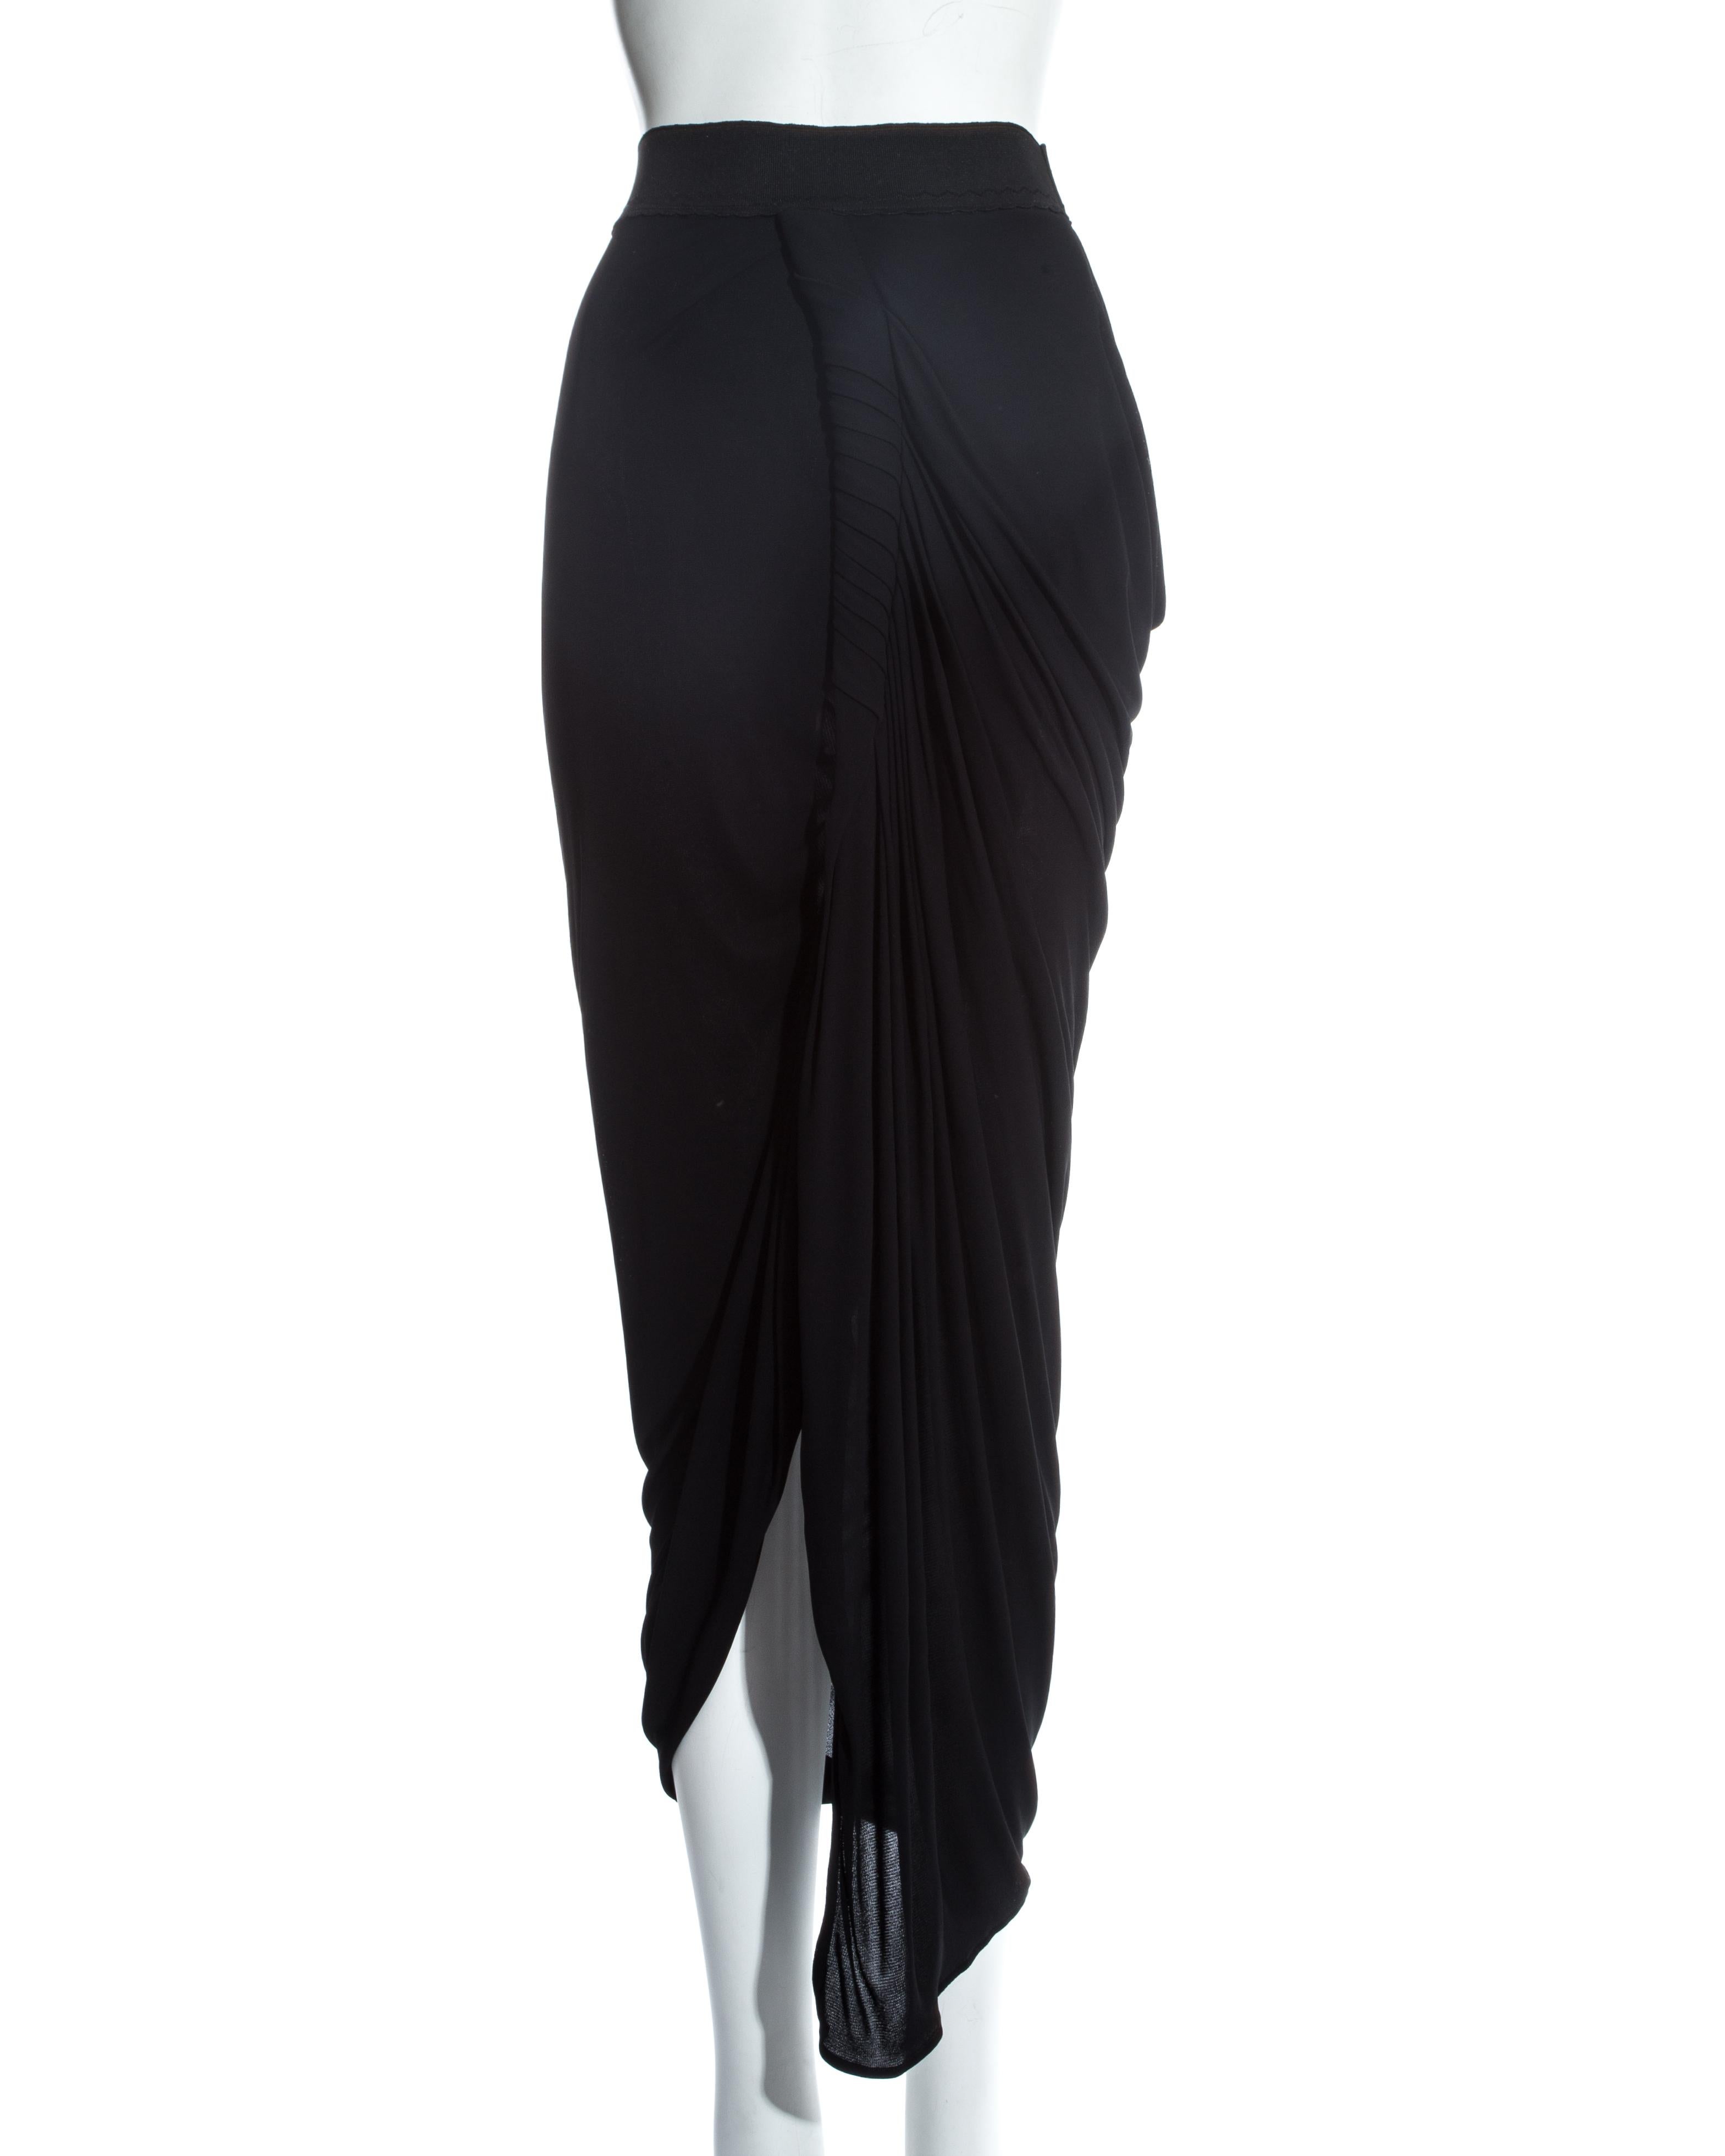 Black Jean Paul Gaultier black jersey draped evening skirt, ss 2009